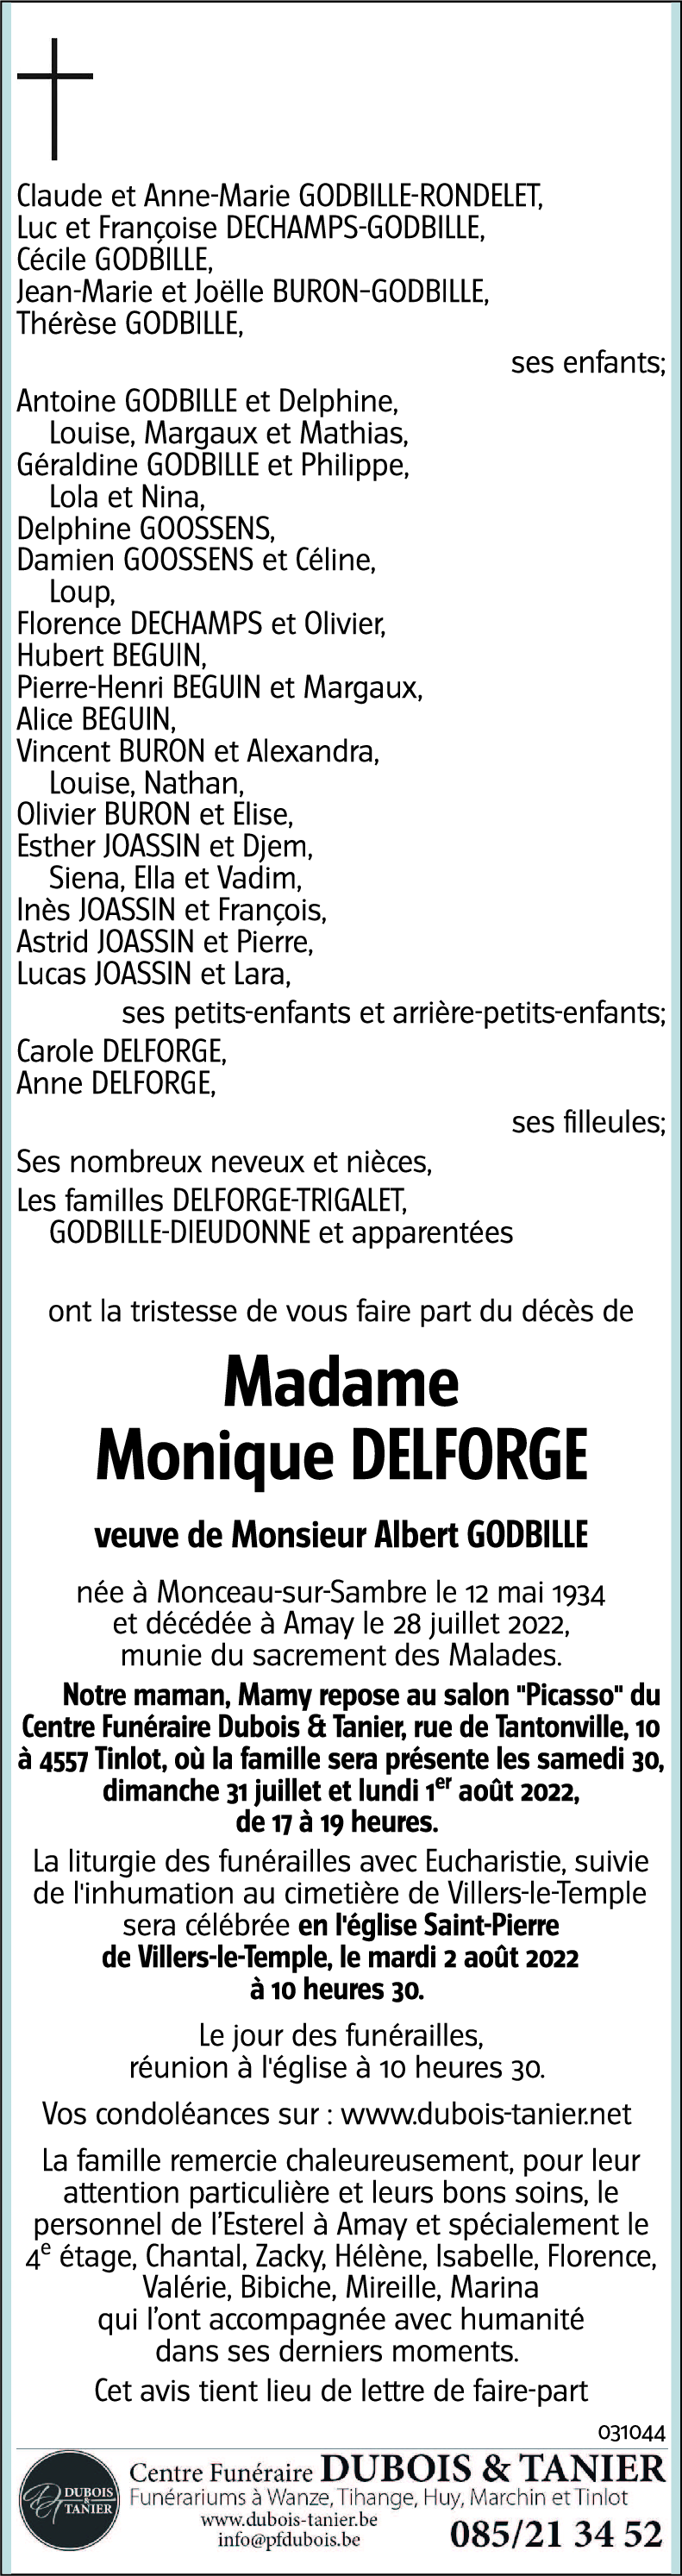 Monique DELFORGE